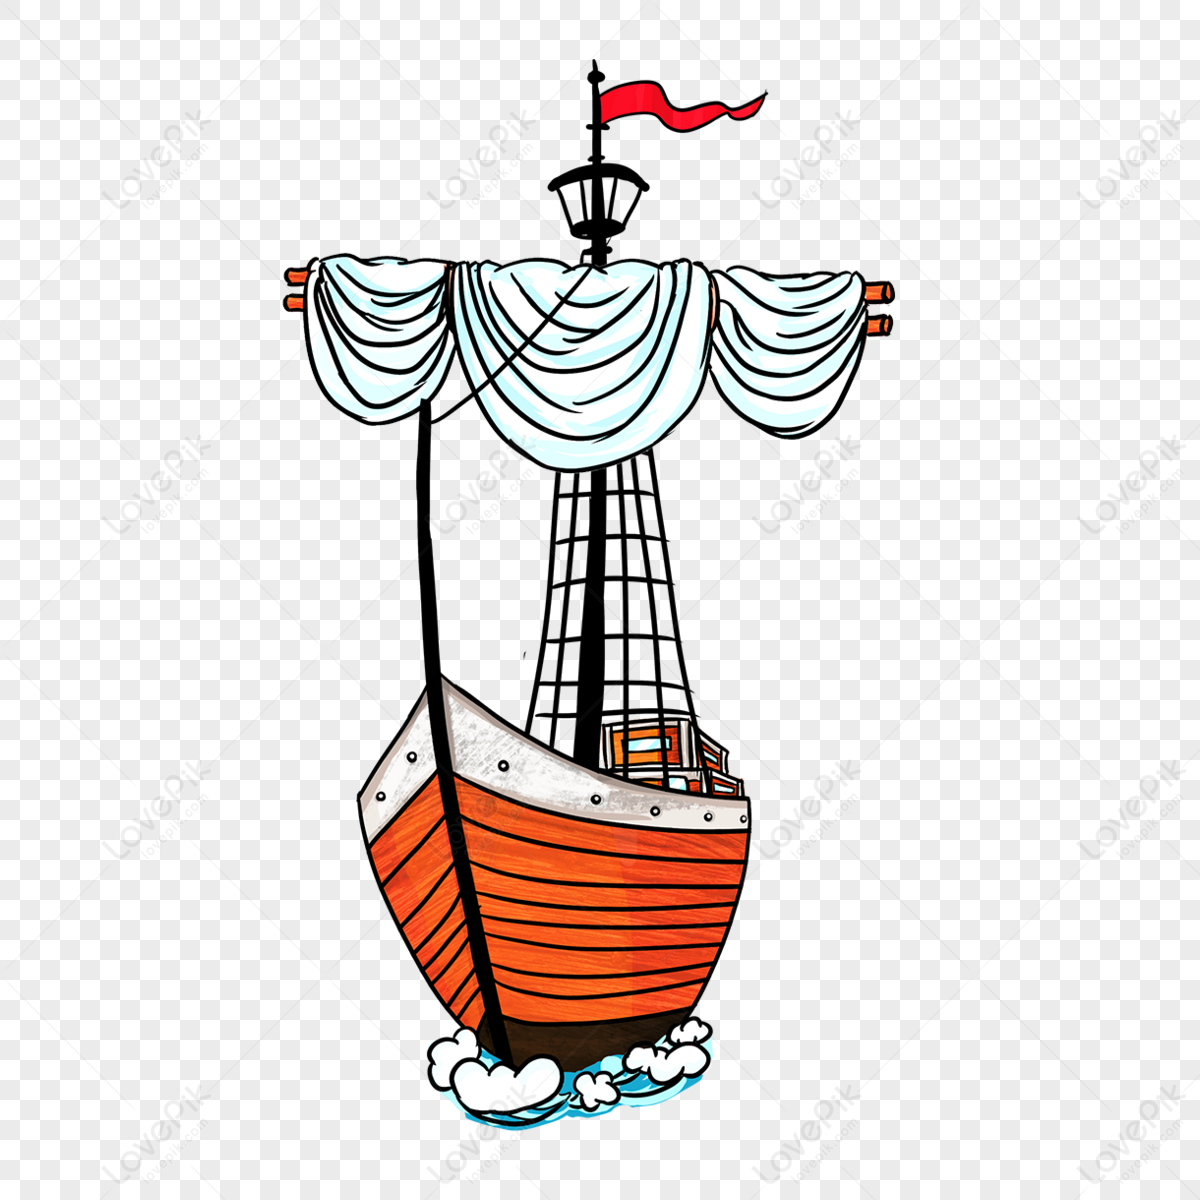 Cartoon style clip art orange sailing sailboat,spray,ferry png image